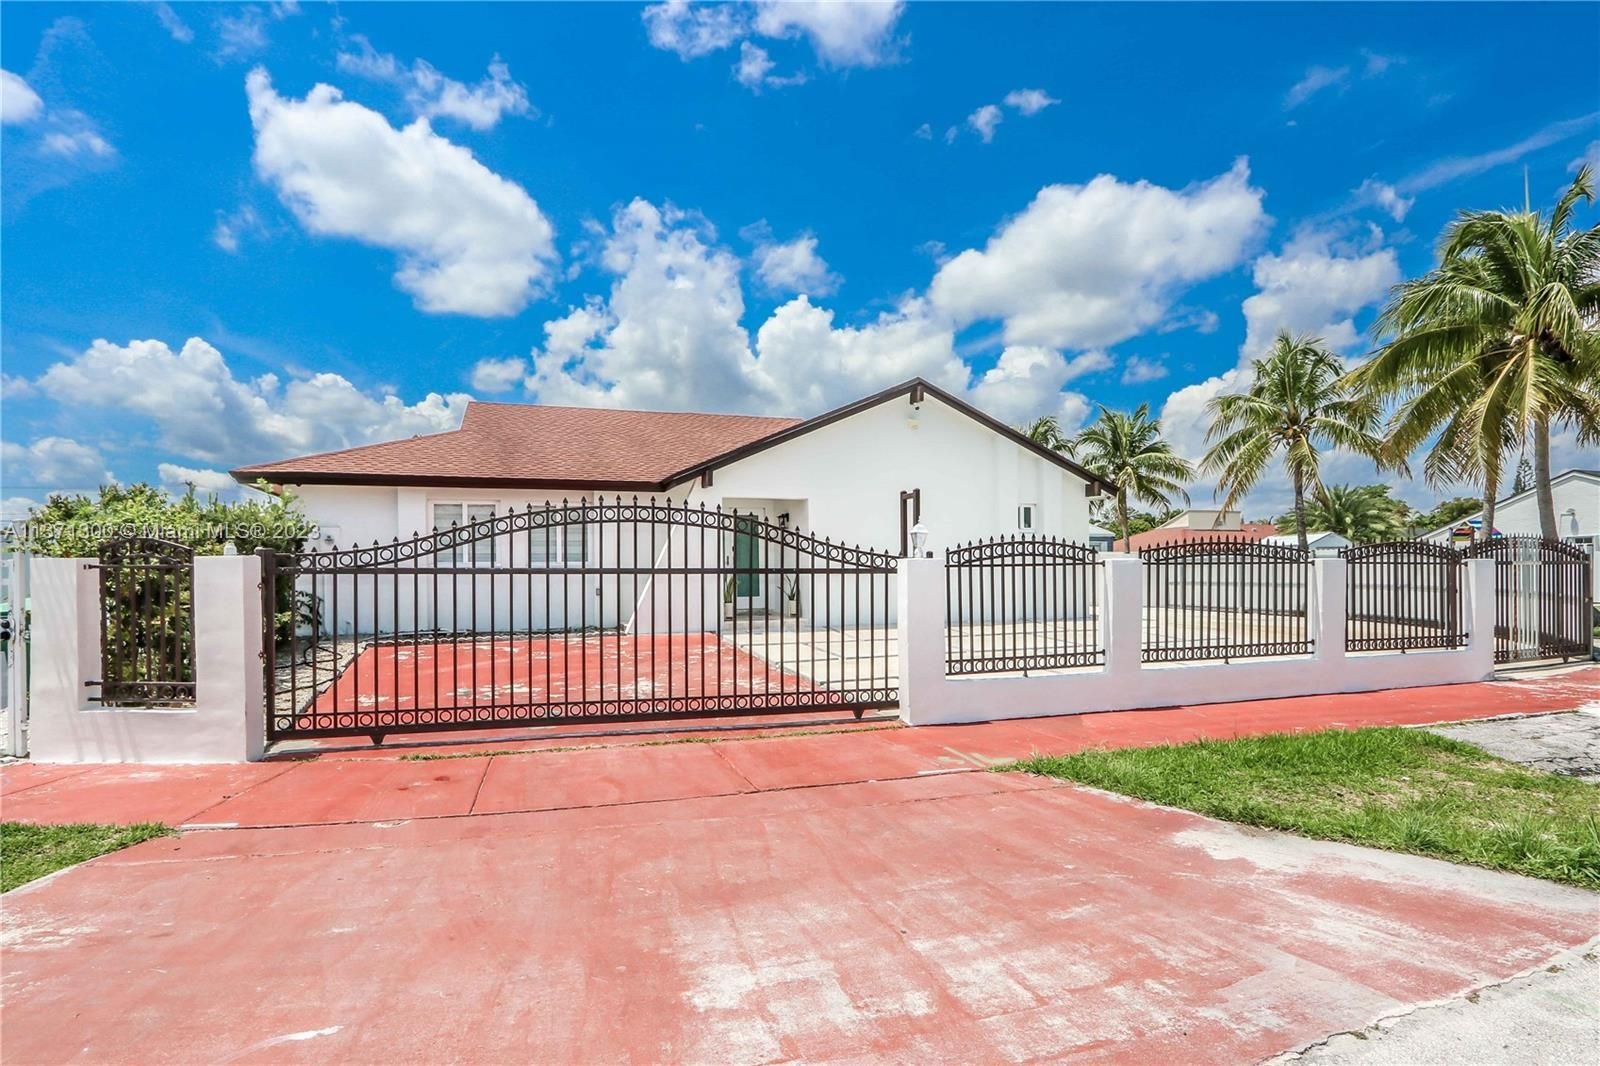 Real estate property located at 20610 125th Ct, Miami-Dade County, Miami, FL